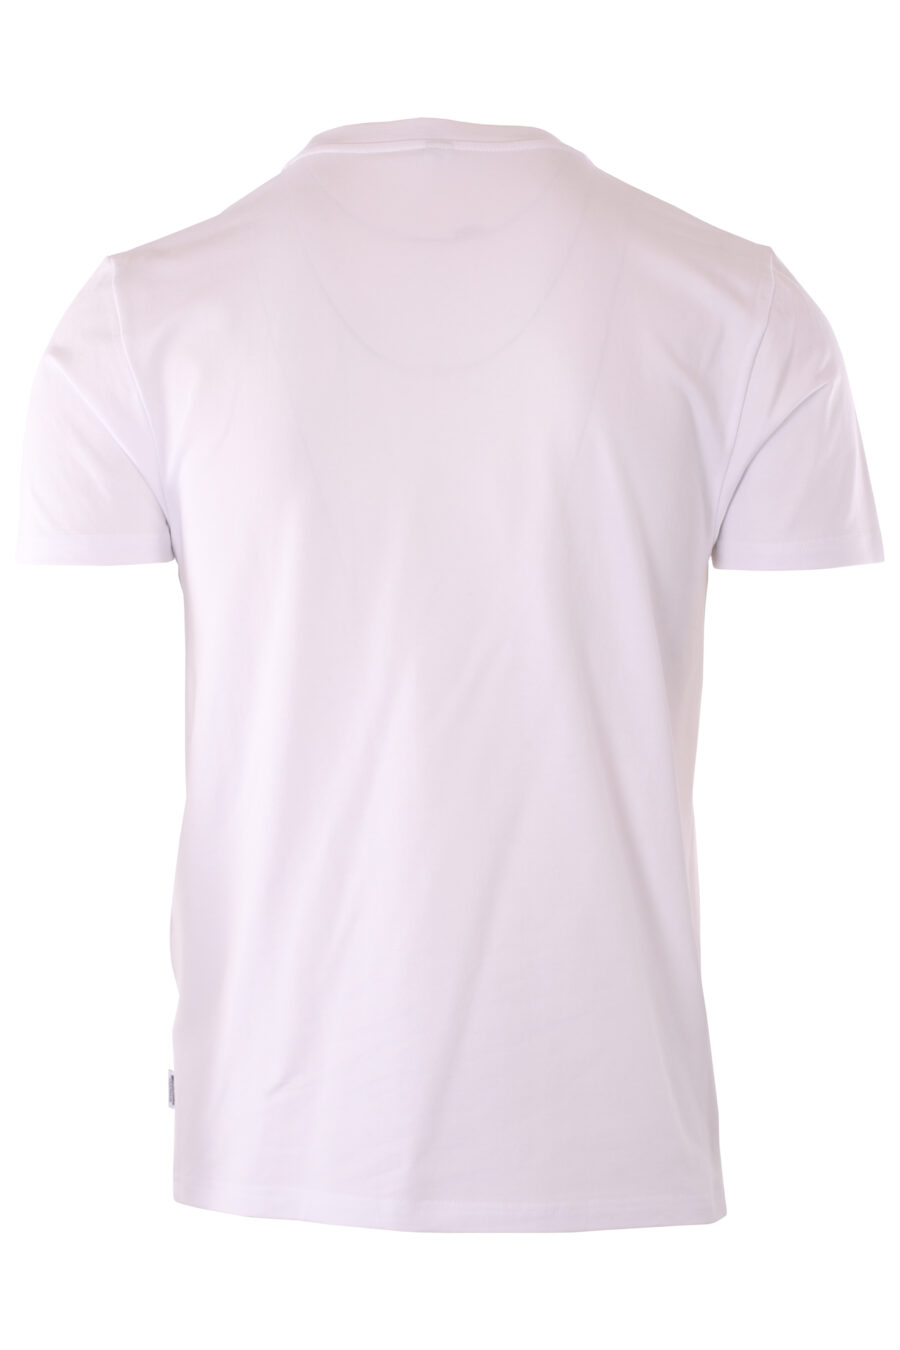 Camiseta blanca "slim fit" con minilogo oso "underbear" - IMG 6608